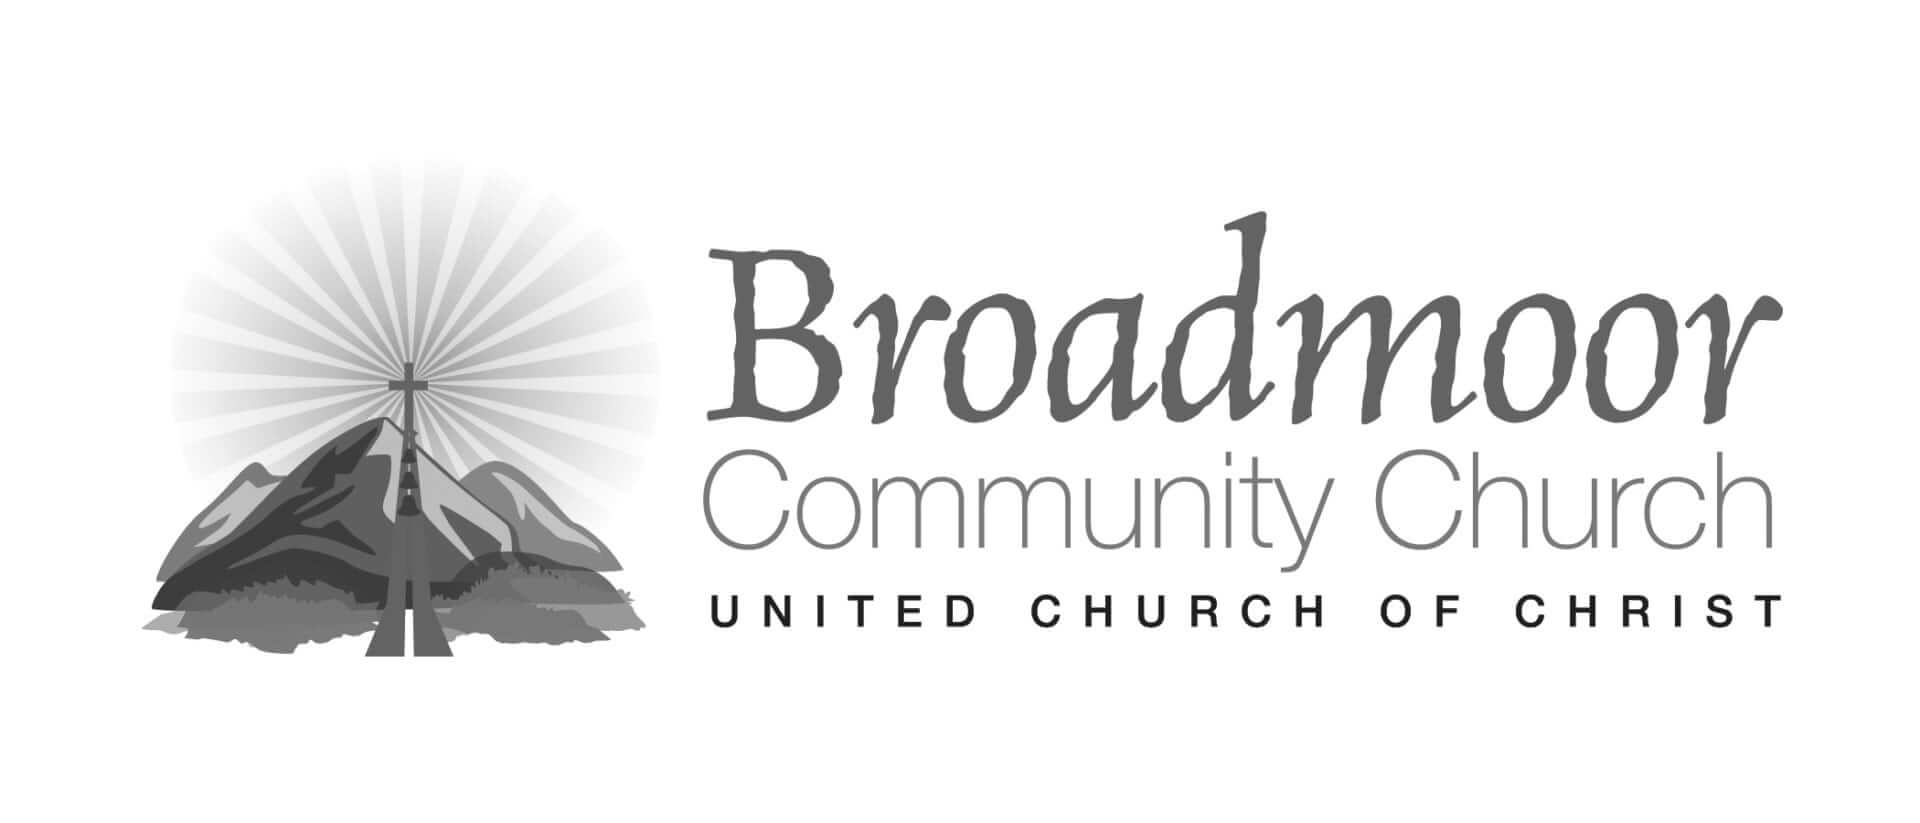 Broadmoor Community Church